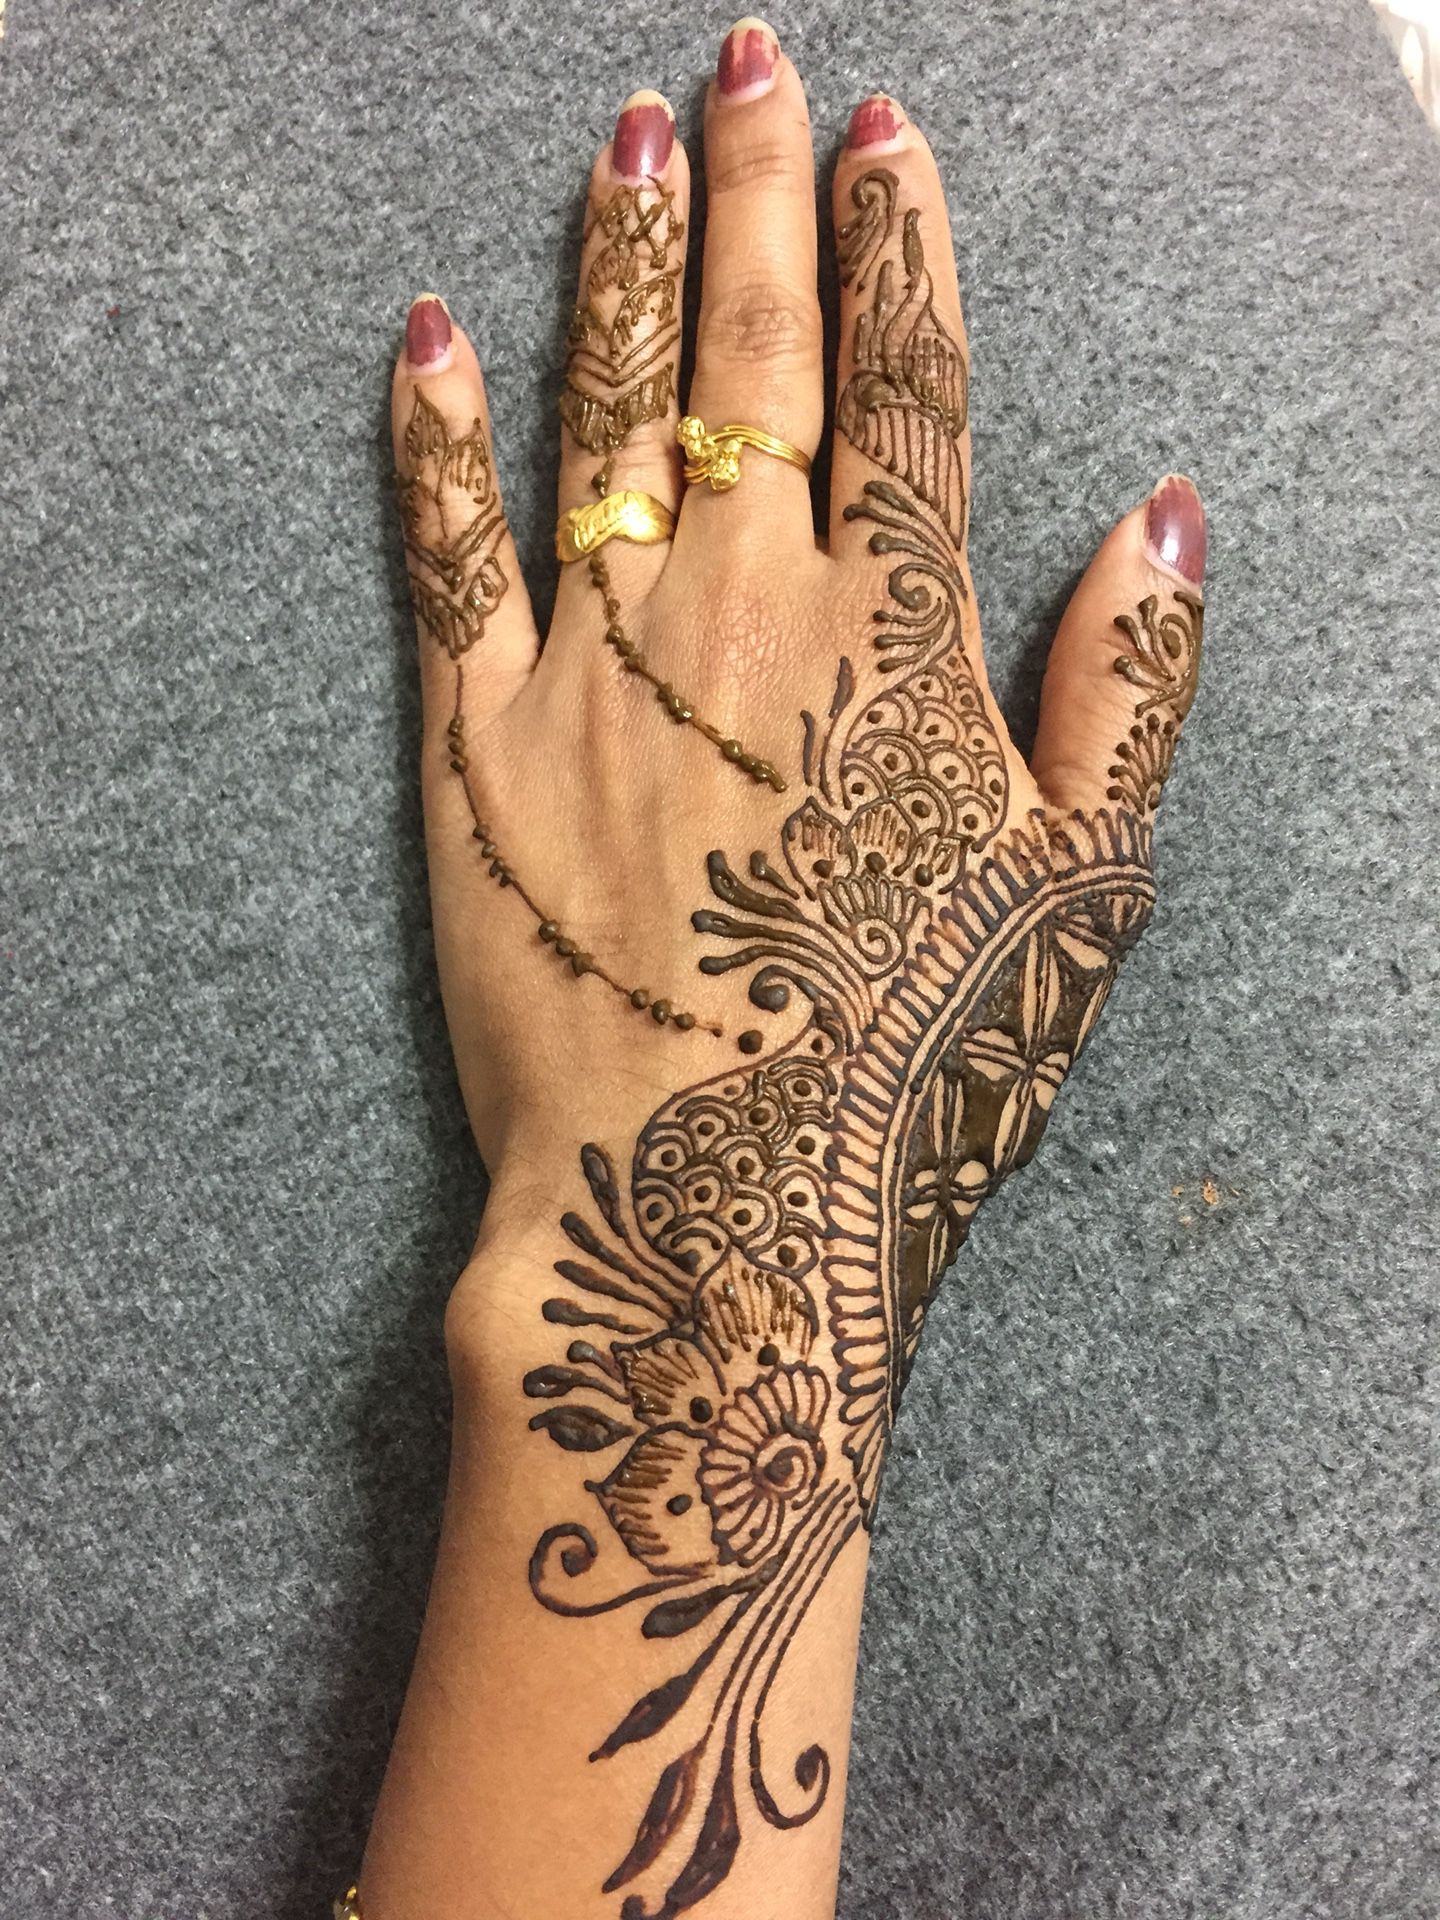 Henna tattooing